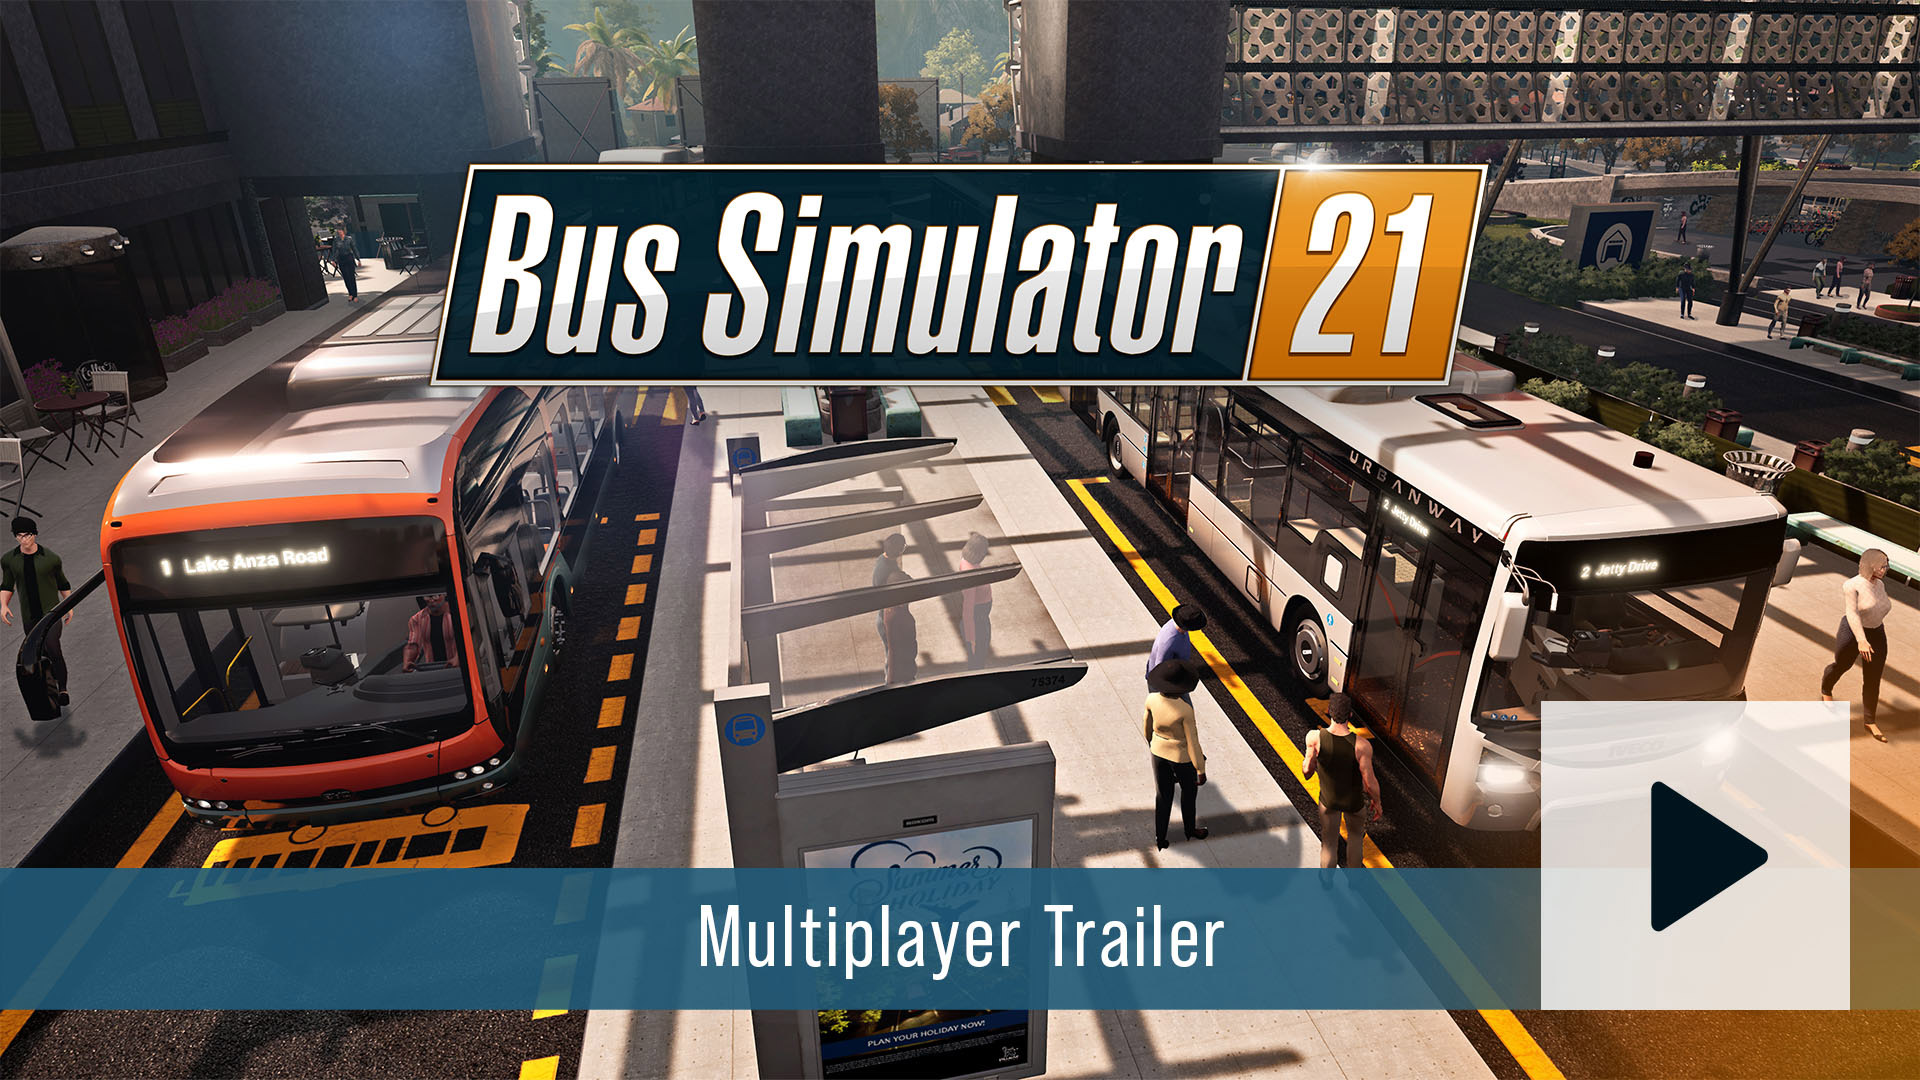 Multiplayer Trailer